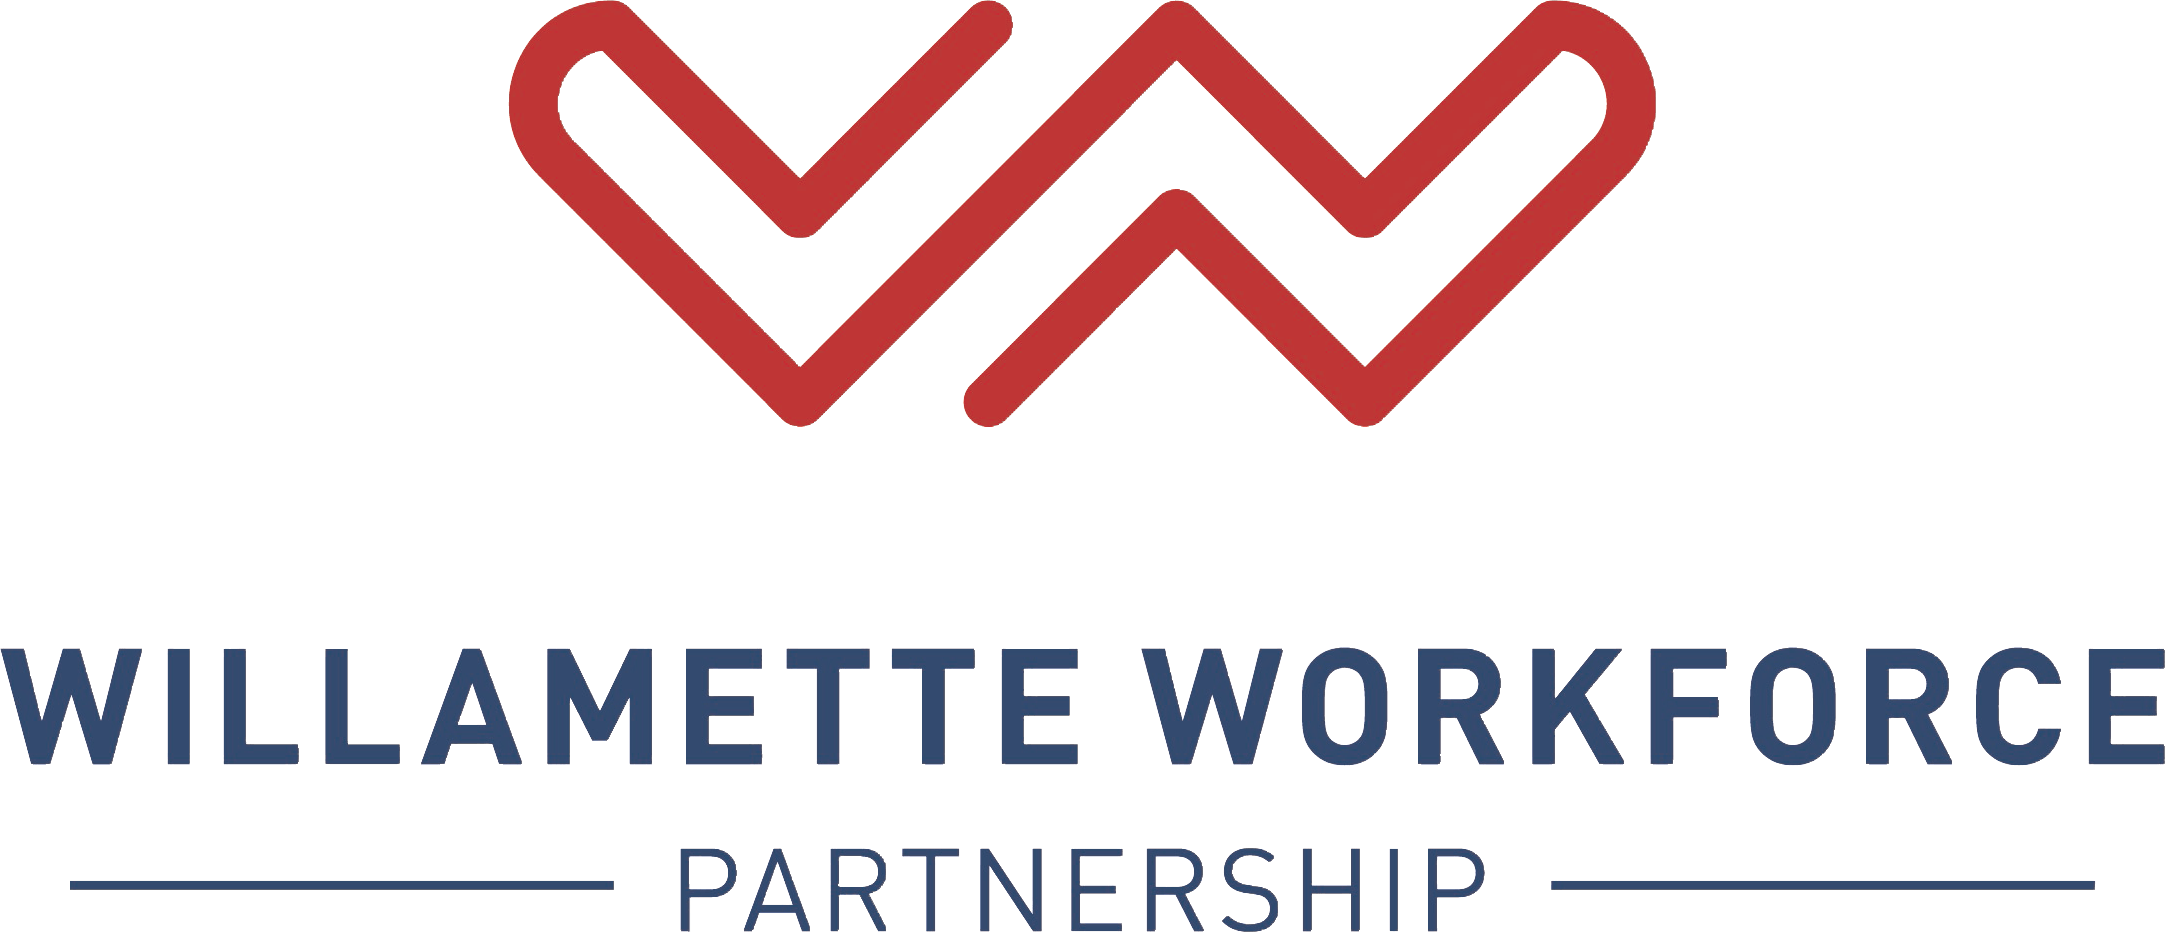 Willamette Workforce Partnership logo